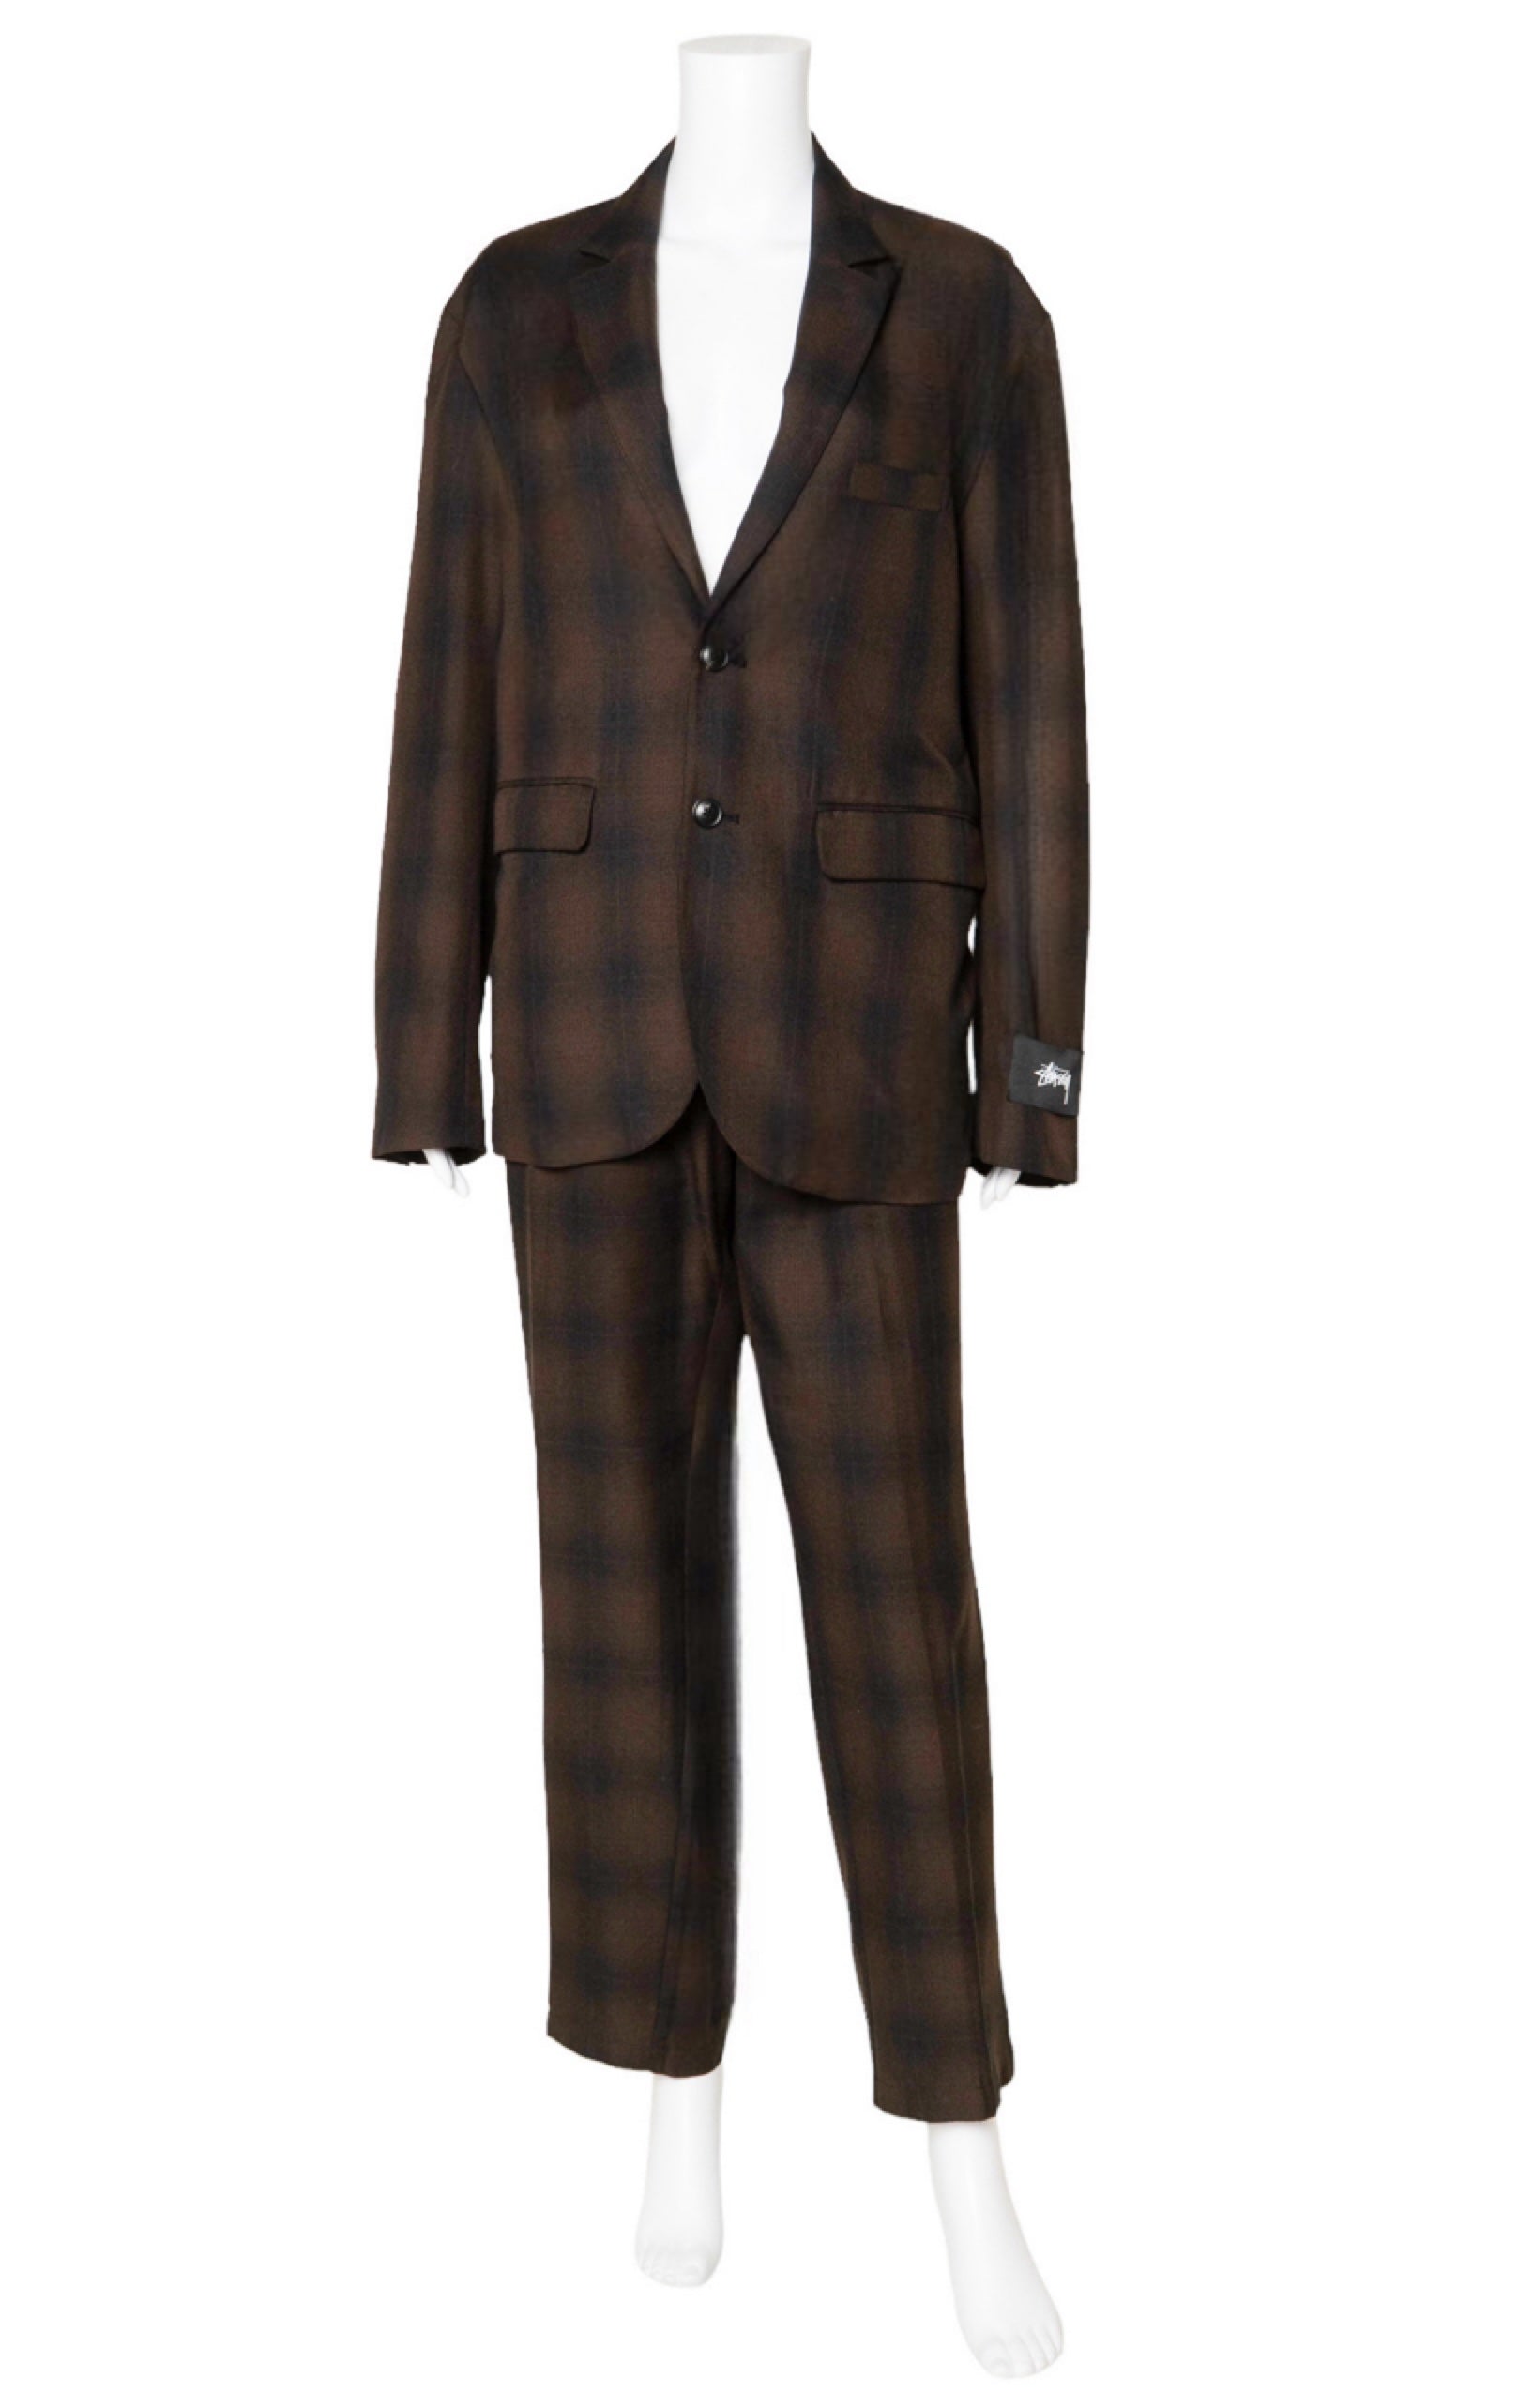 STUSSY Suit Size: Jacket - Men's M / Fits like Women's L Pants - Men's L / Fit like Women's XL